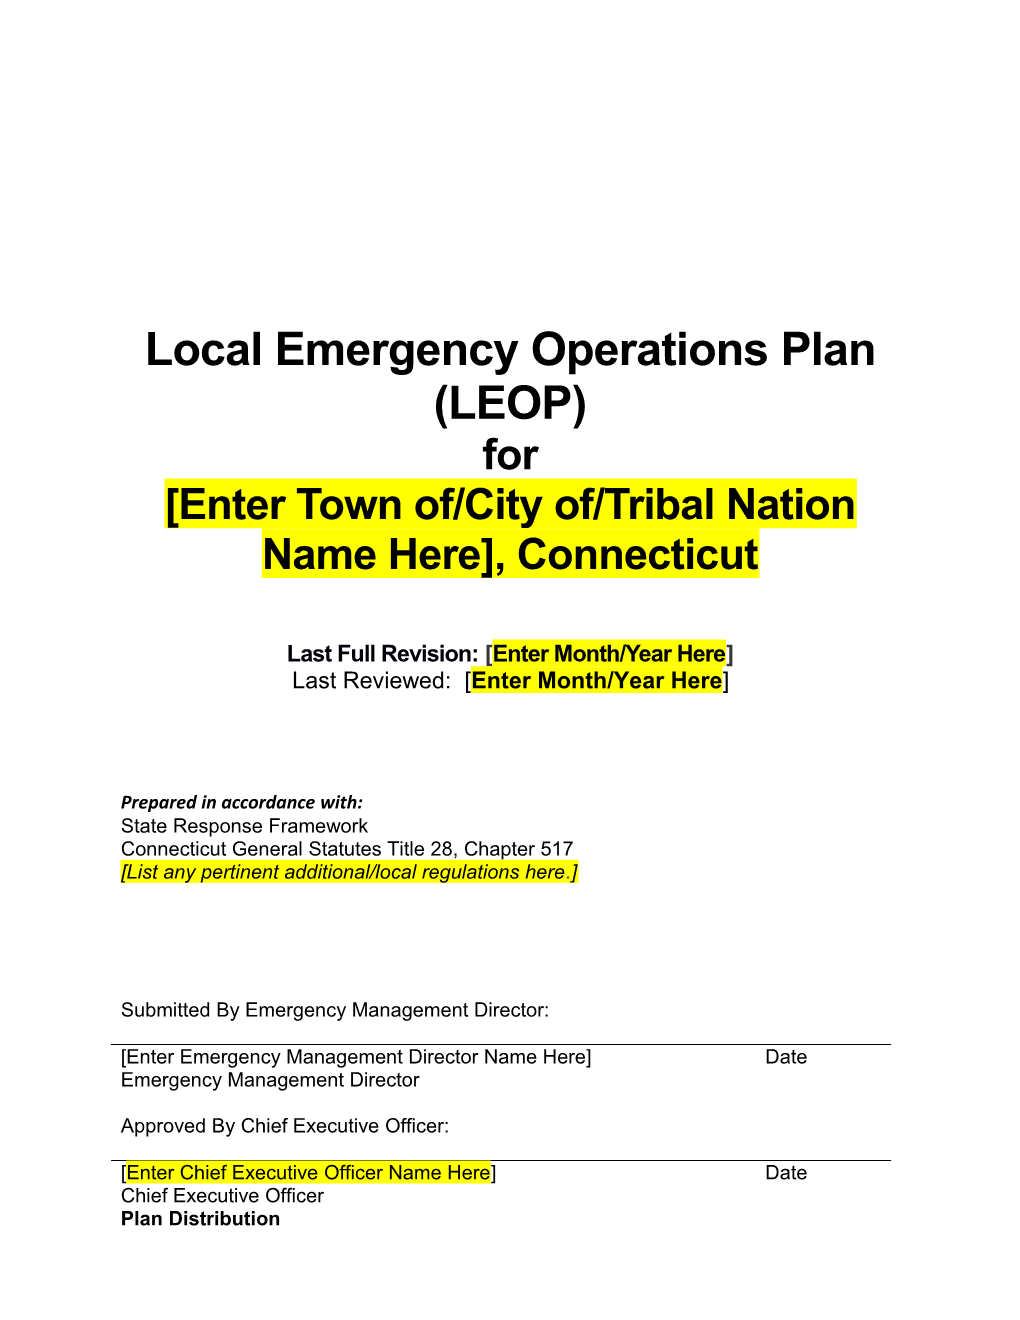 Local Emergency Operations Plan (LEOP)